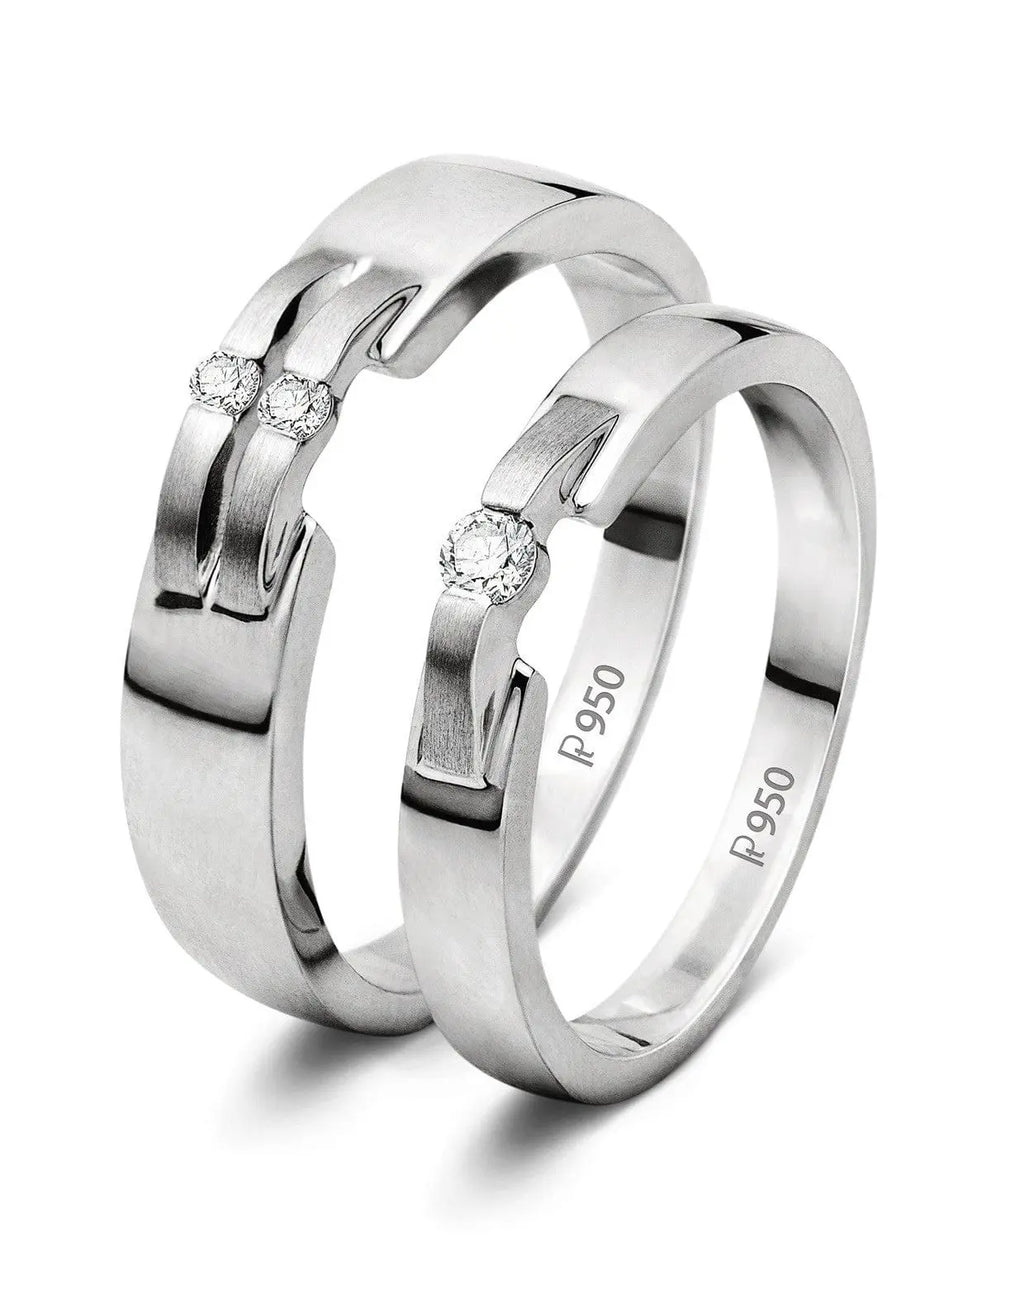 Platinum Couple Rings - Super Sale - Women's Ring Size 7 New Style Platinum Love Bands SJ PTO 202